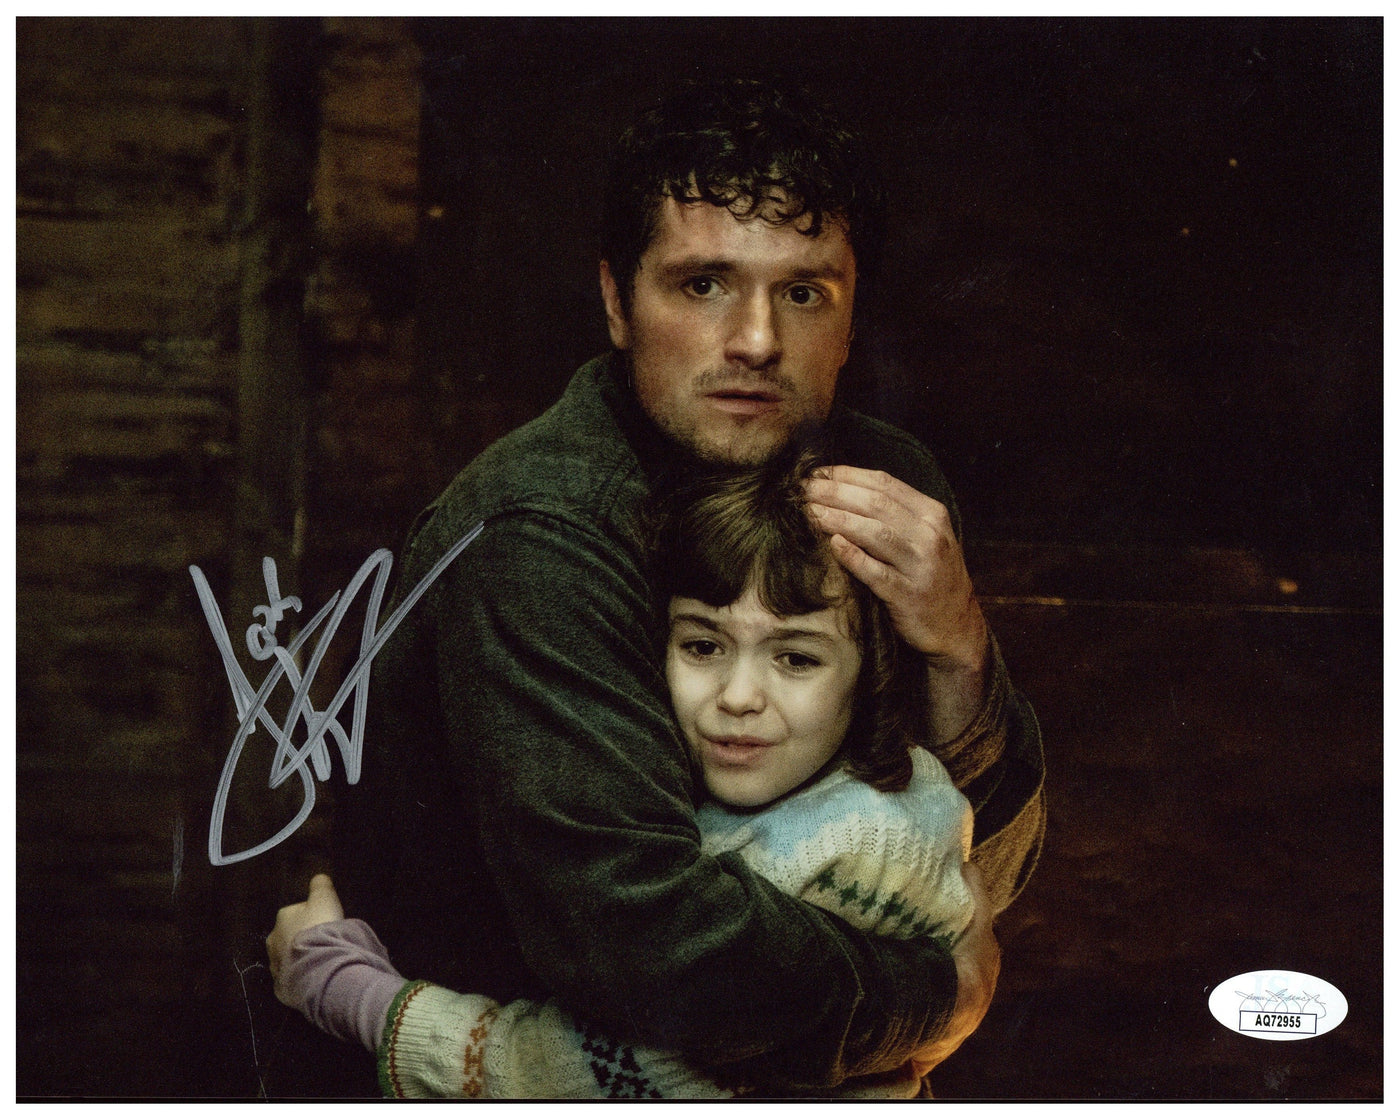 Josh Hutcherson Signed 8x10 Photo Five Nights at Freddy's Autographed JSA COA